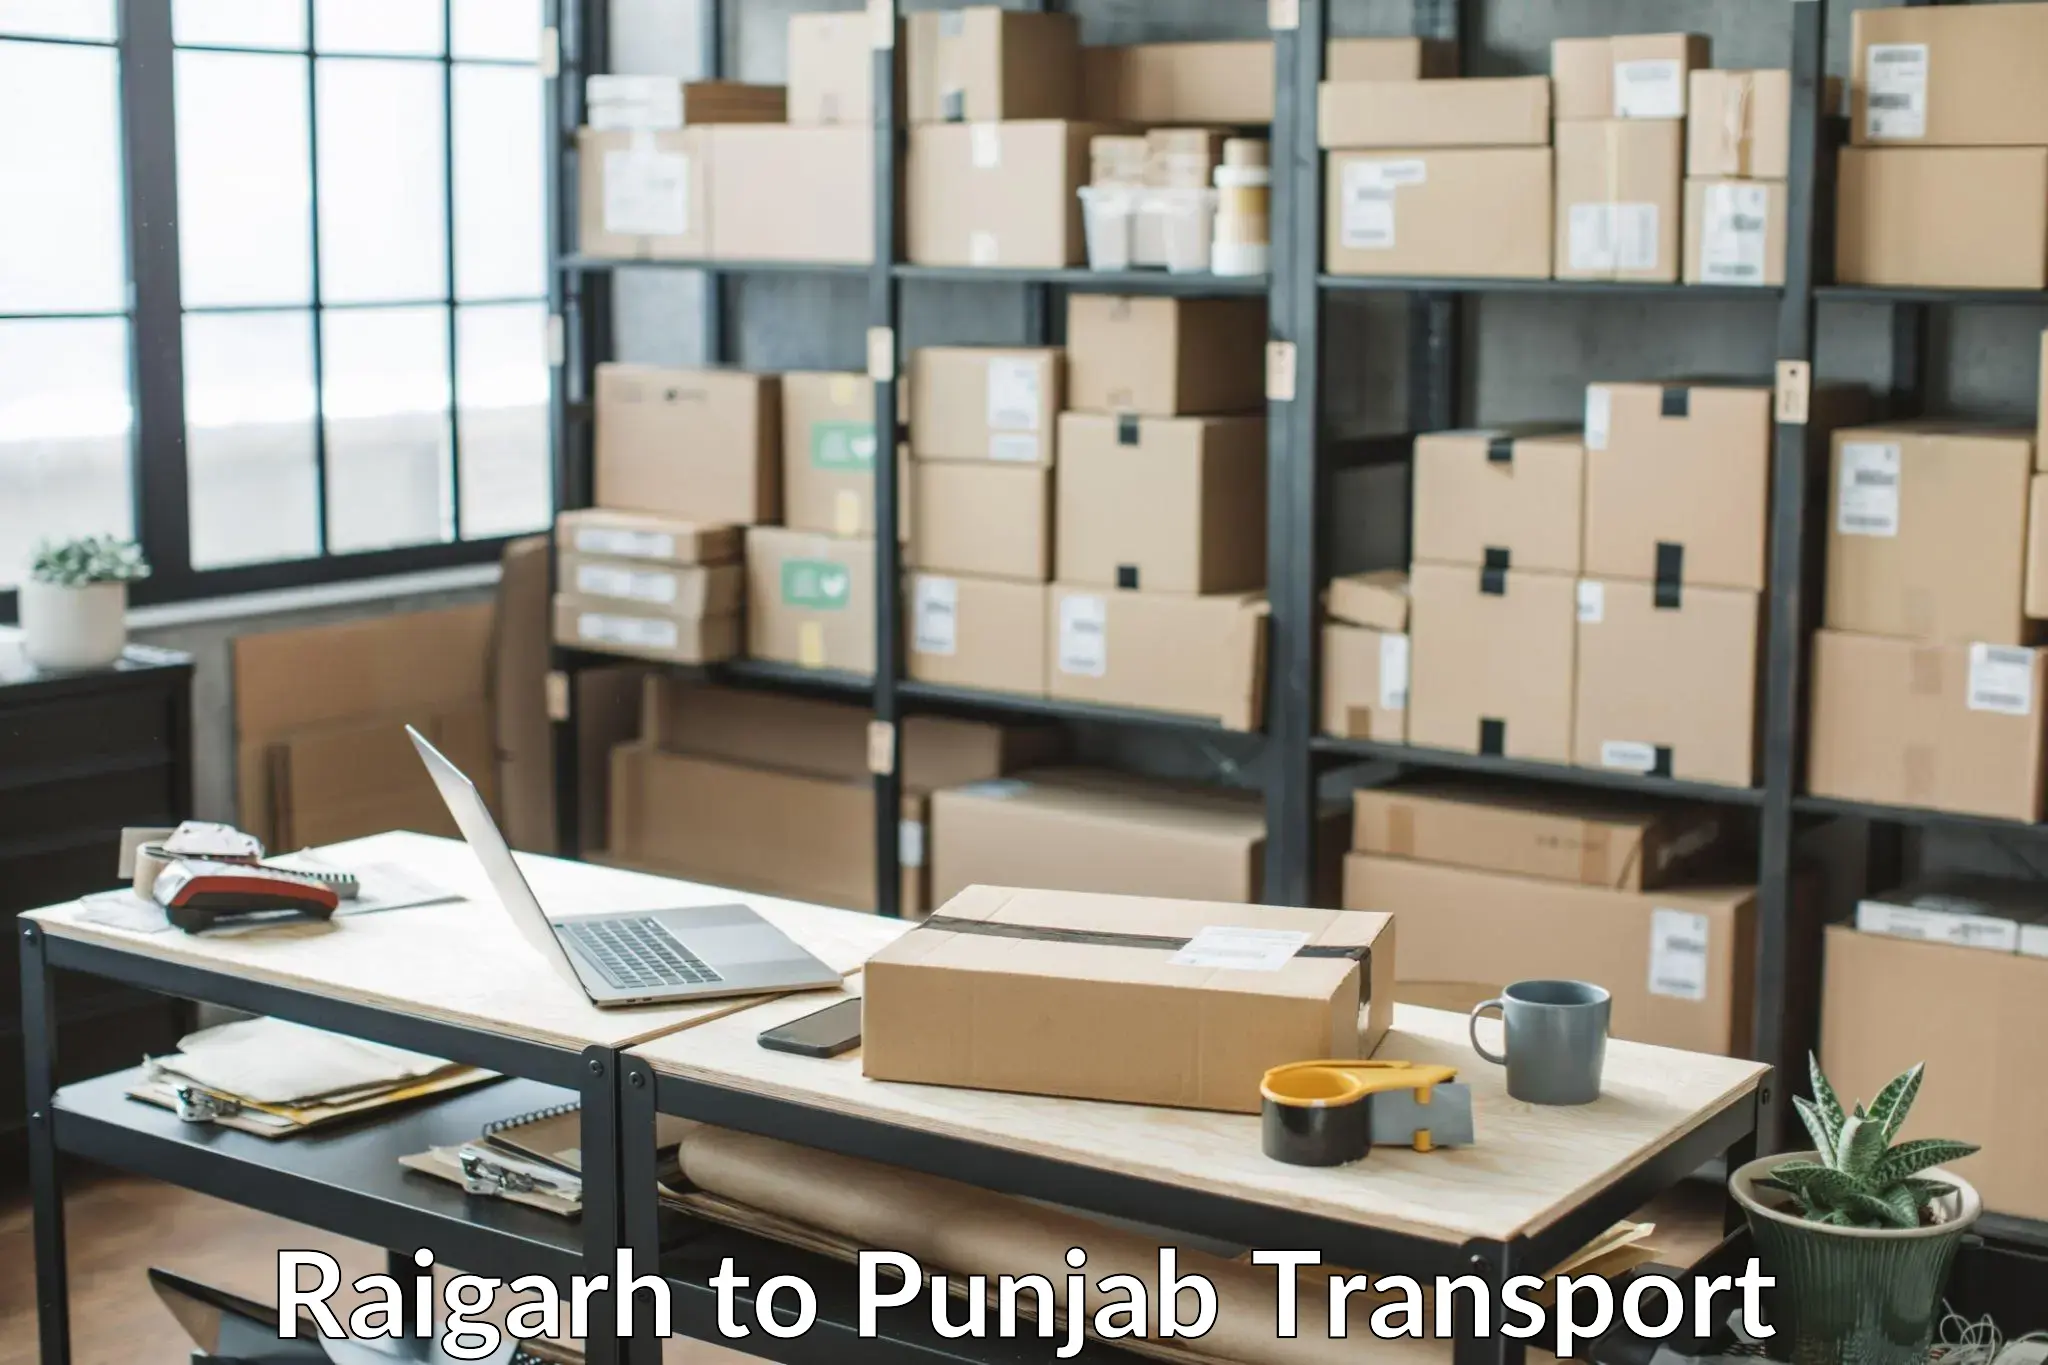 Online transport service Raigarh to Punjab